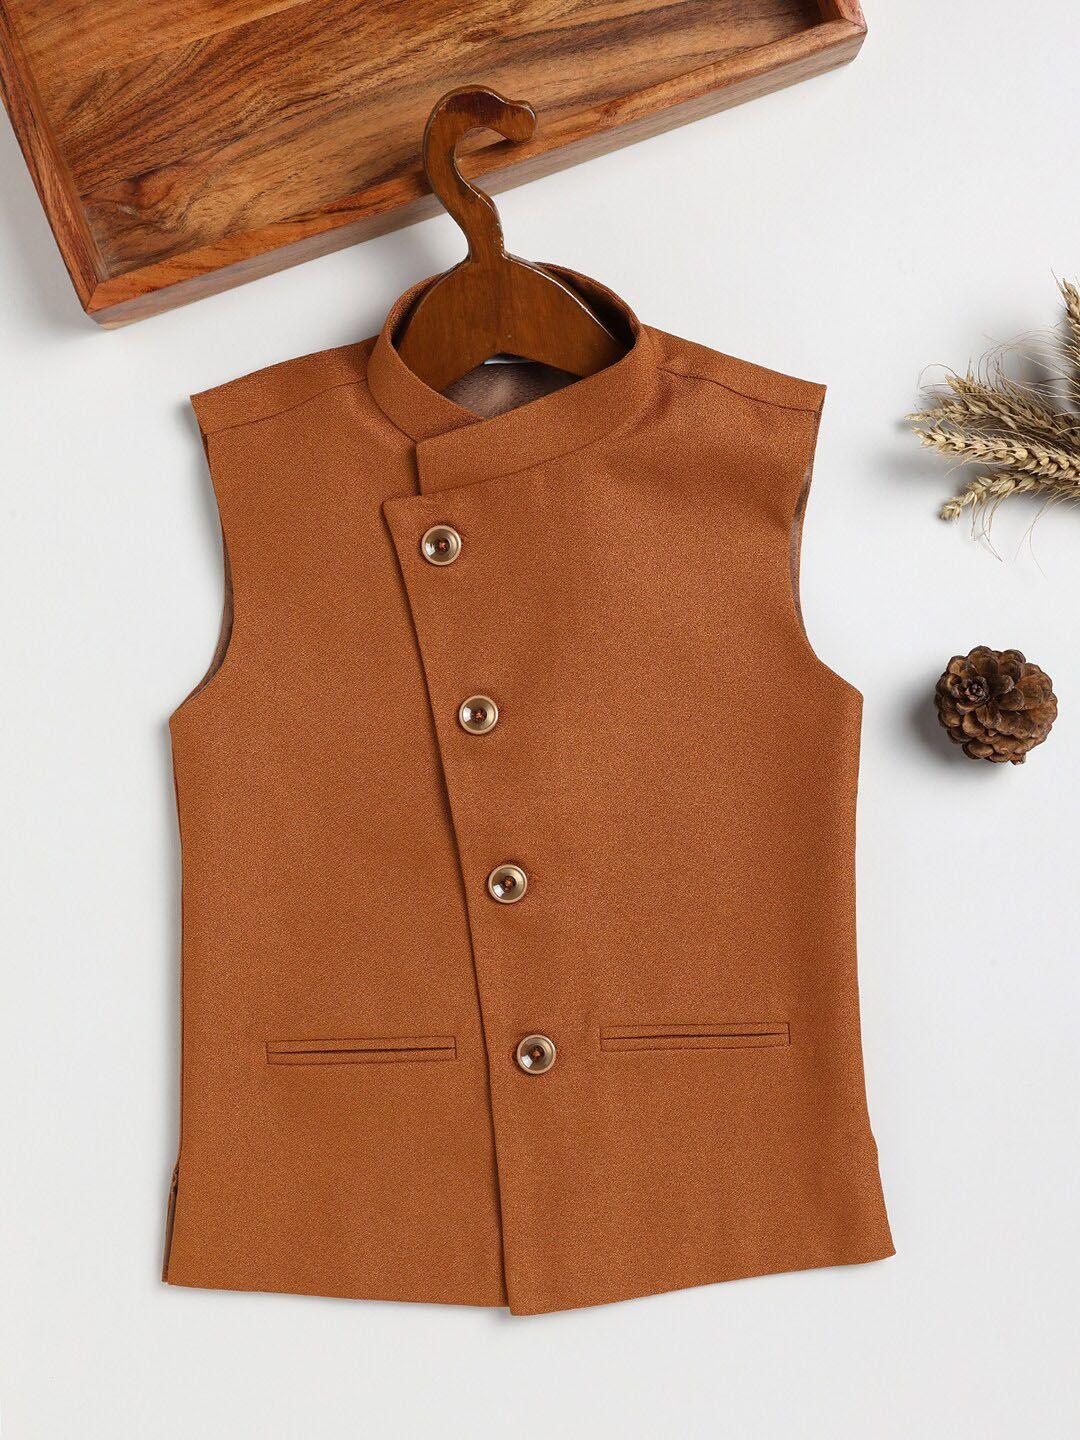 jbn creation boys brown solid woven nehru jacket